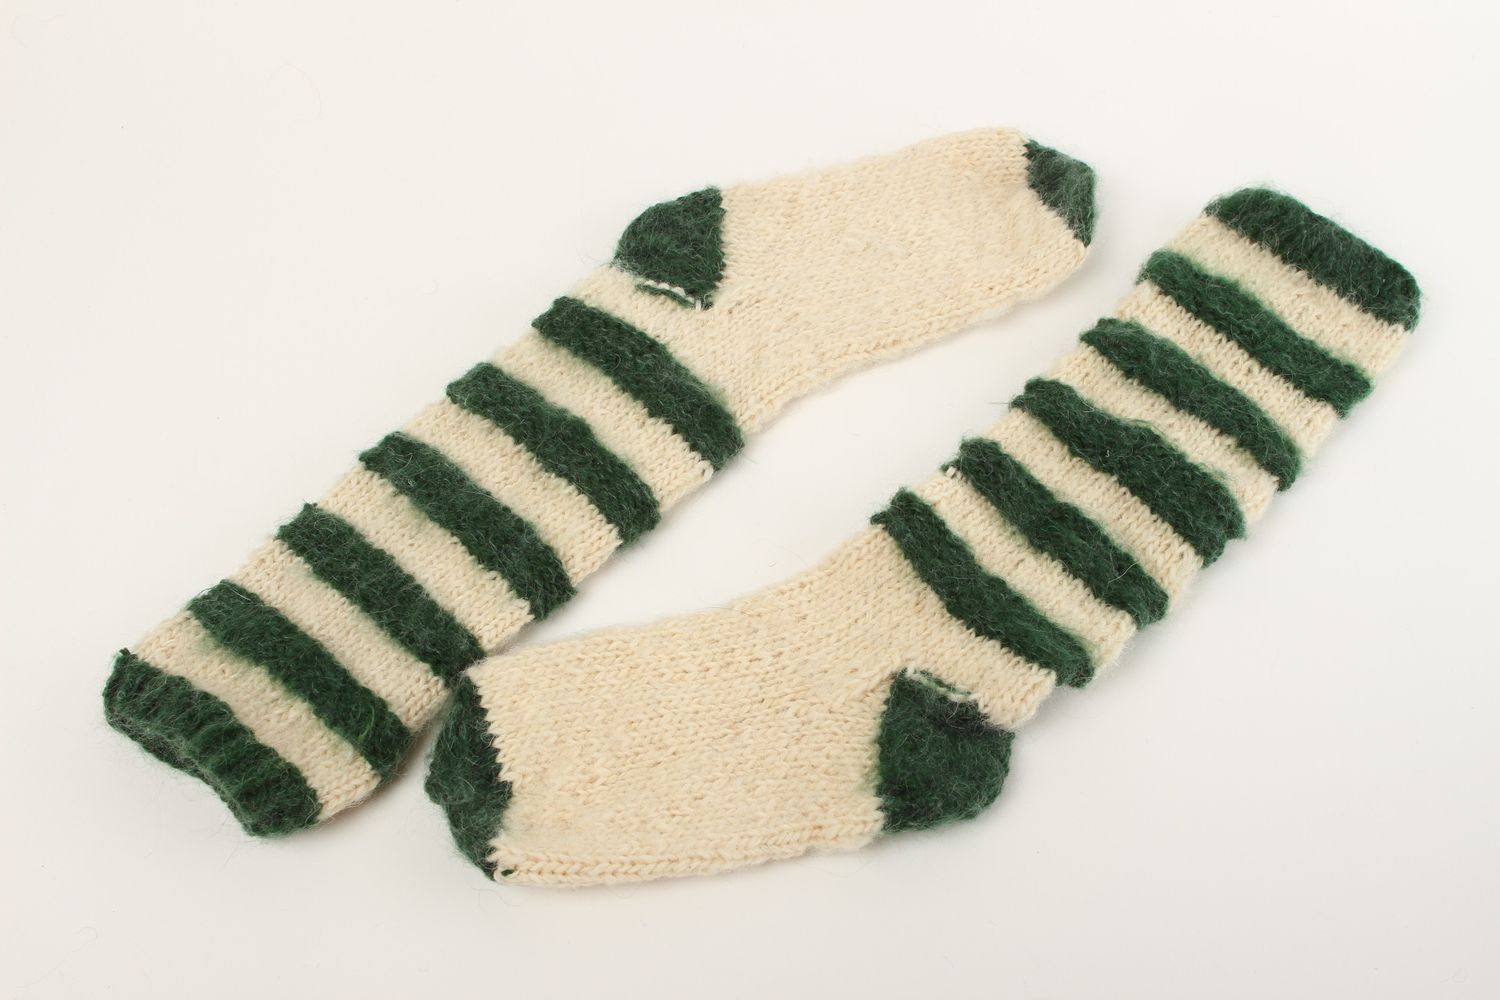 Handmade knitted socks warm socks best wool socks winter clothes gifts for women photo 2